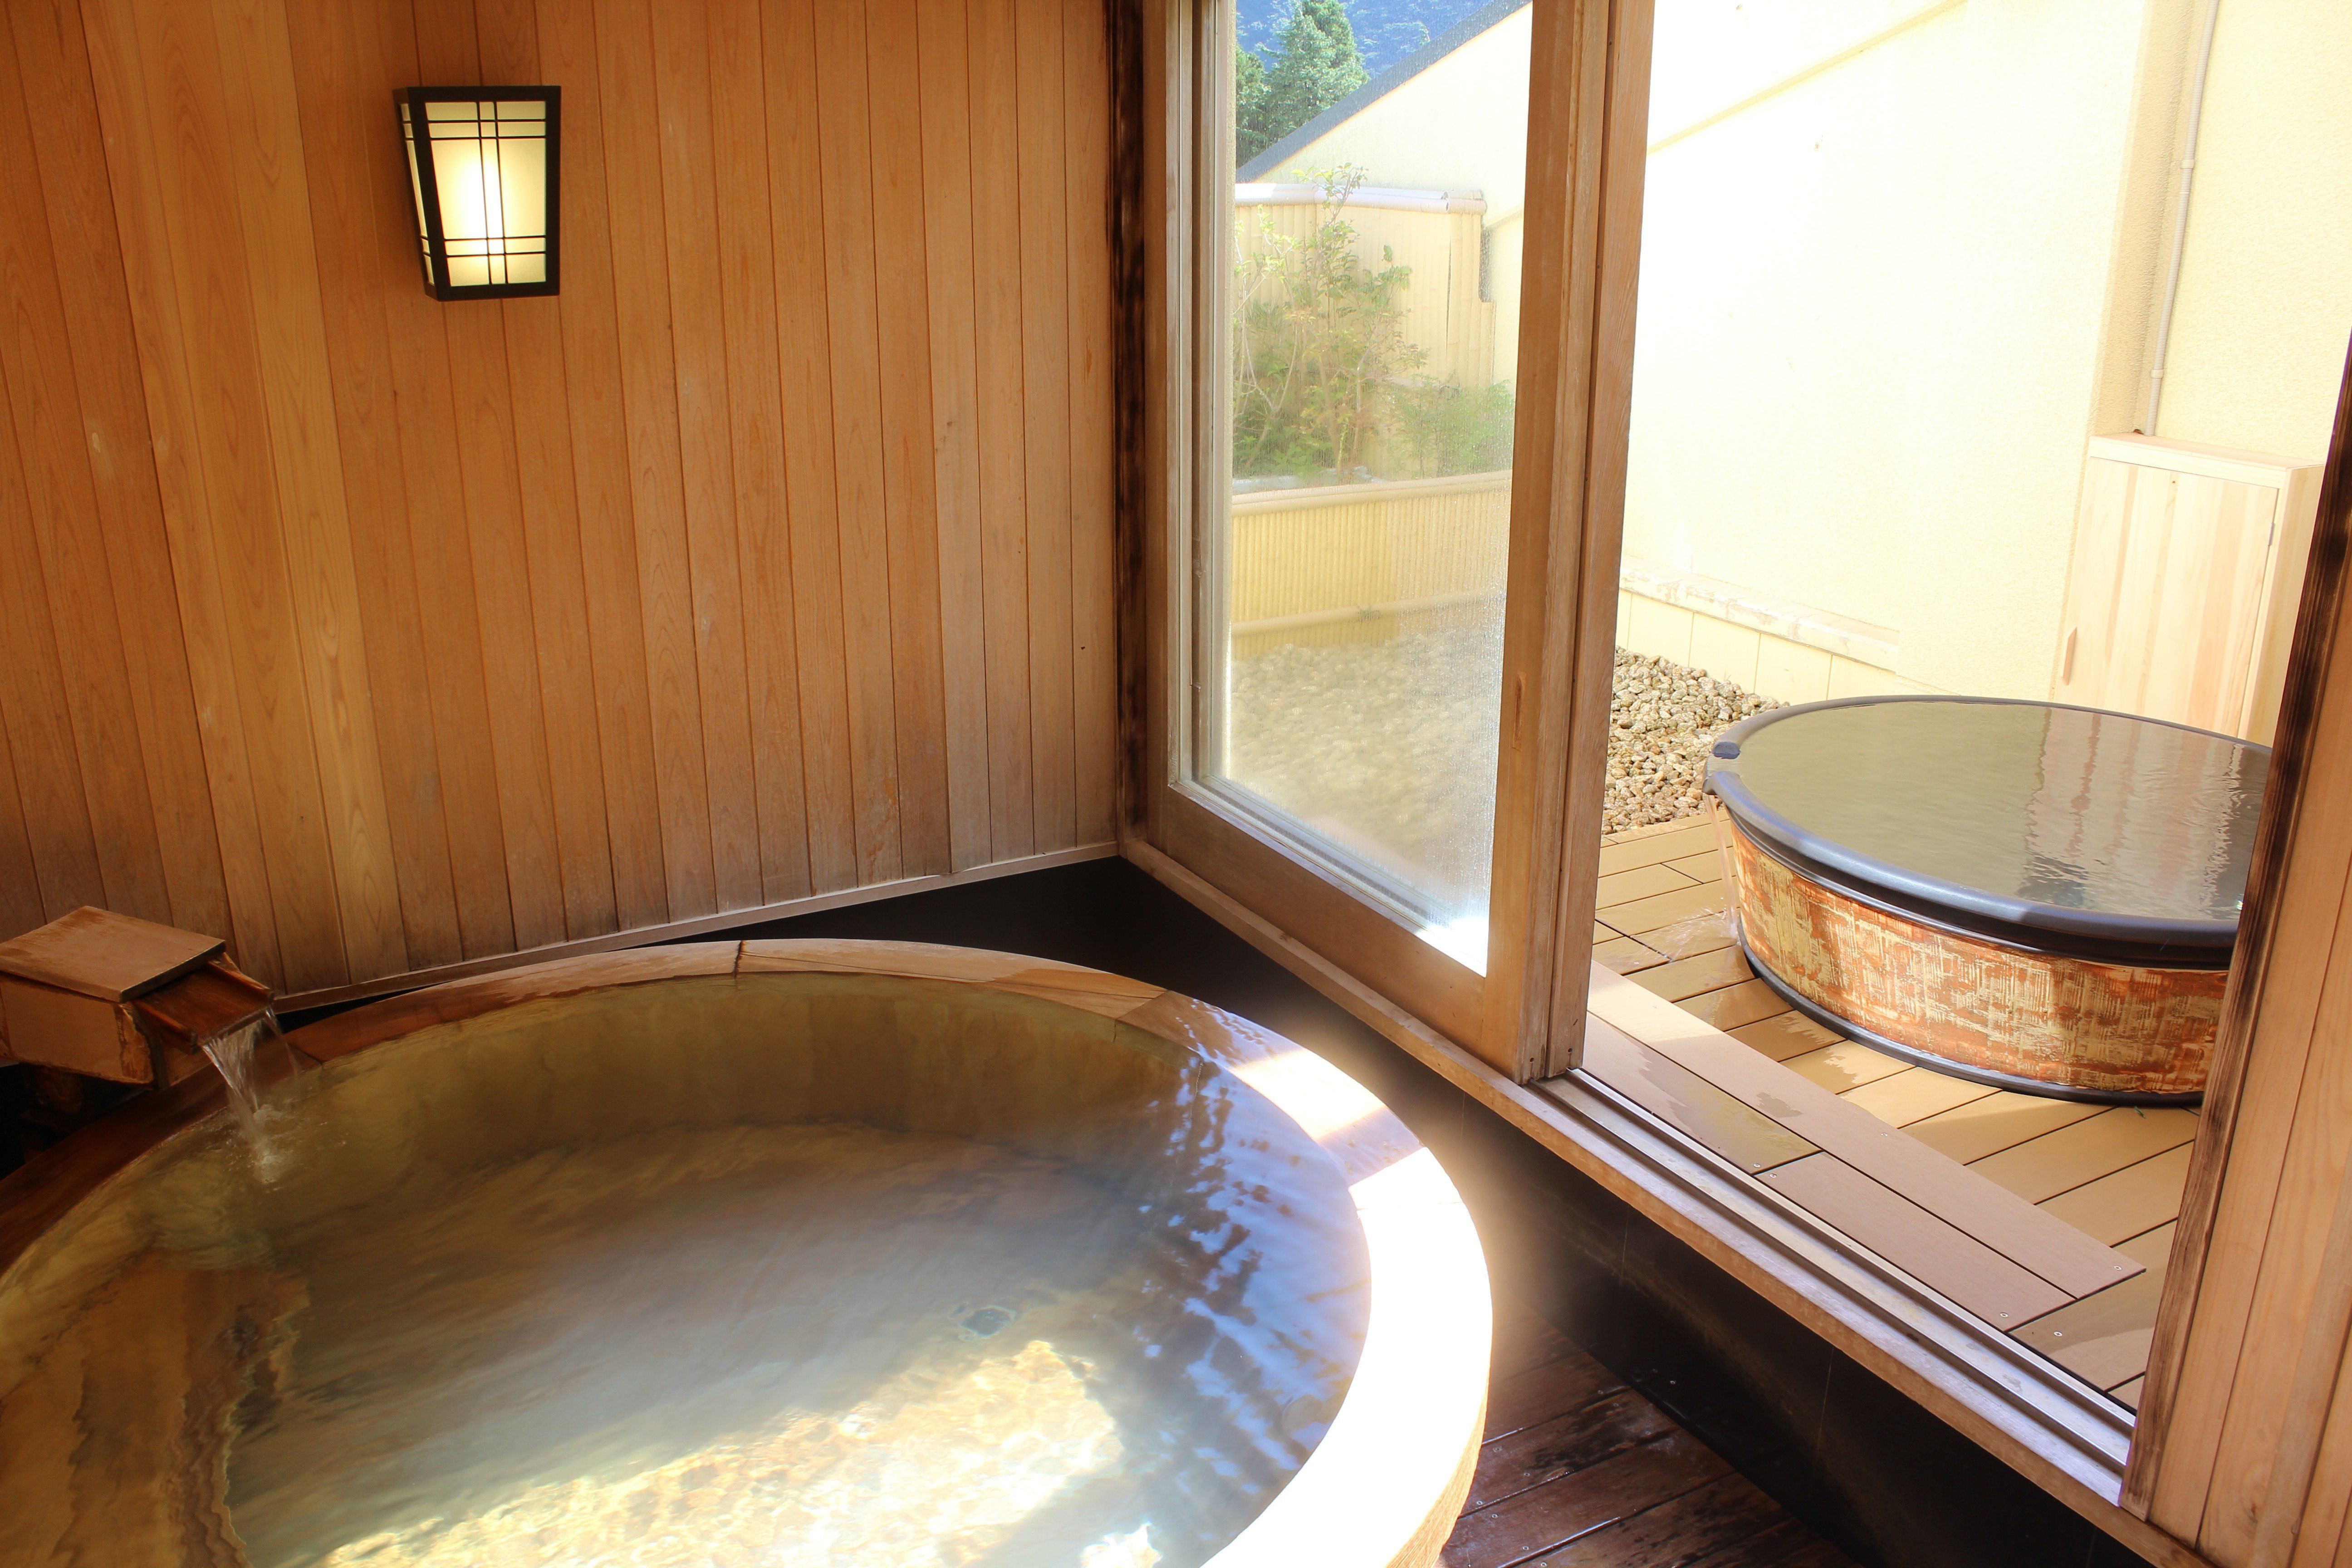 A private bath at Hakone Kowakien Yunessun – a huge amusement park that offers visitors 23 different hot spring baths.